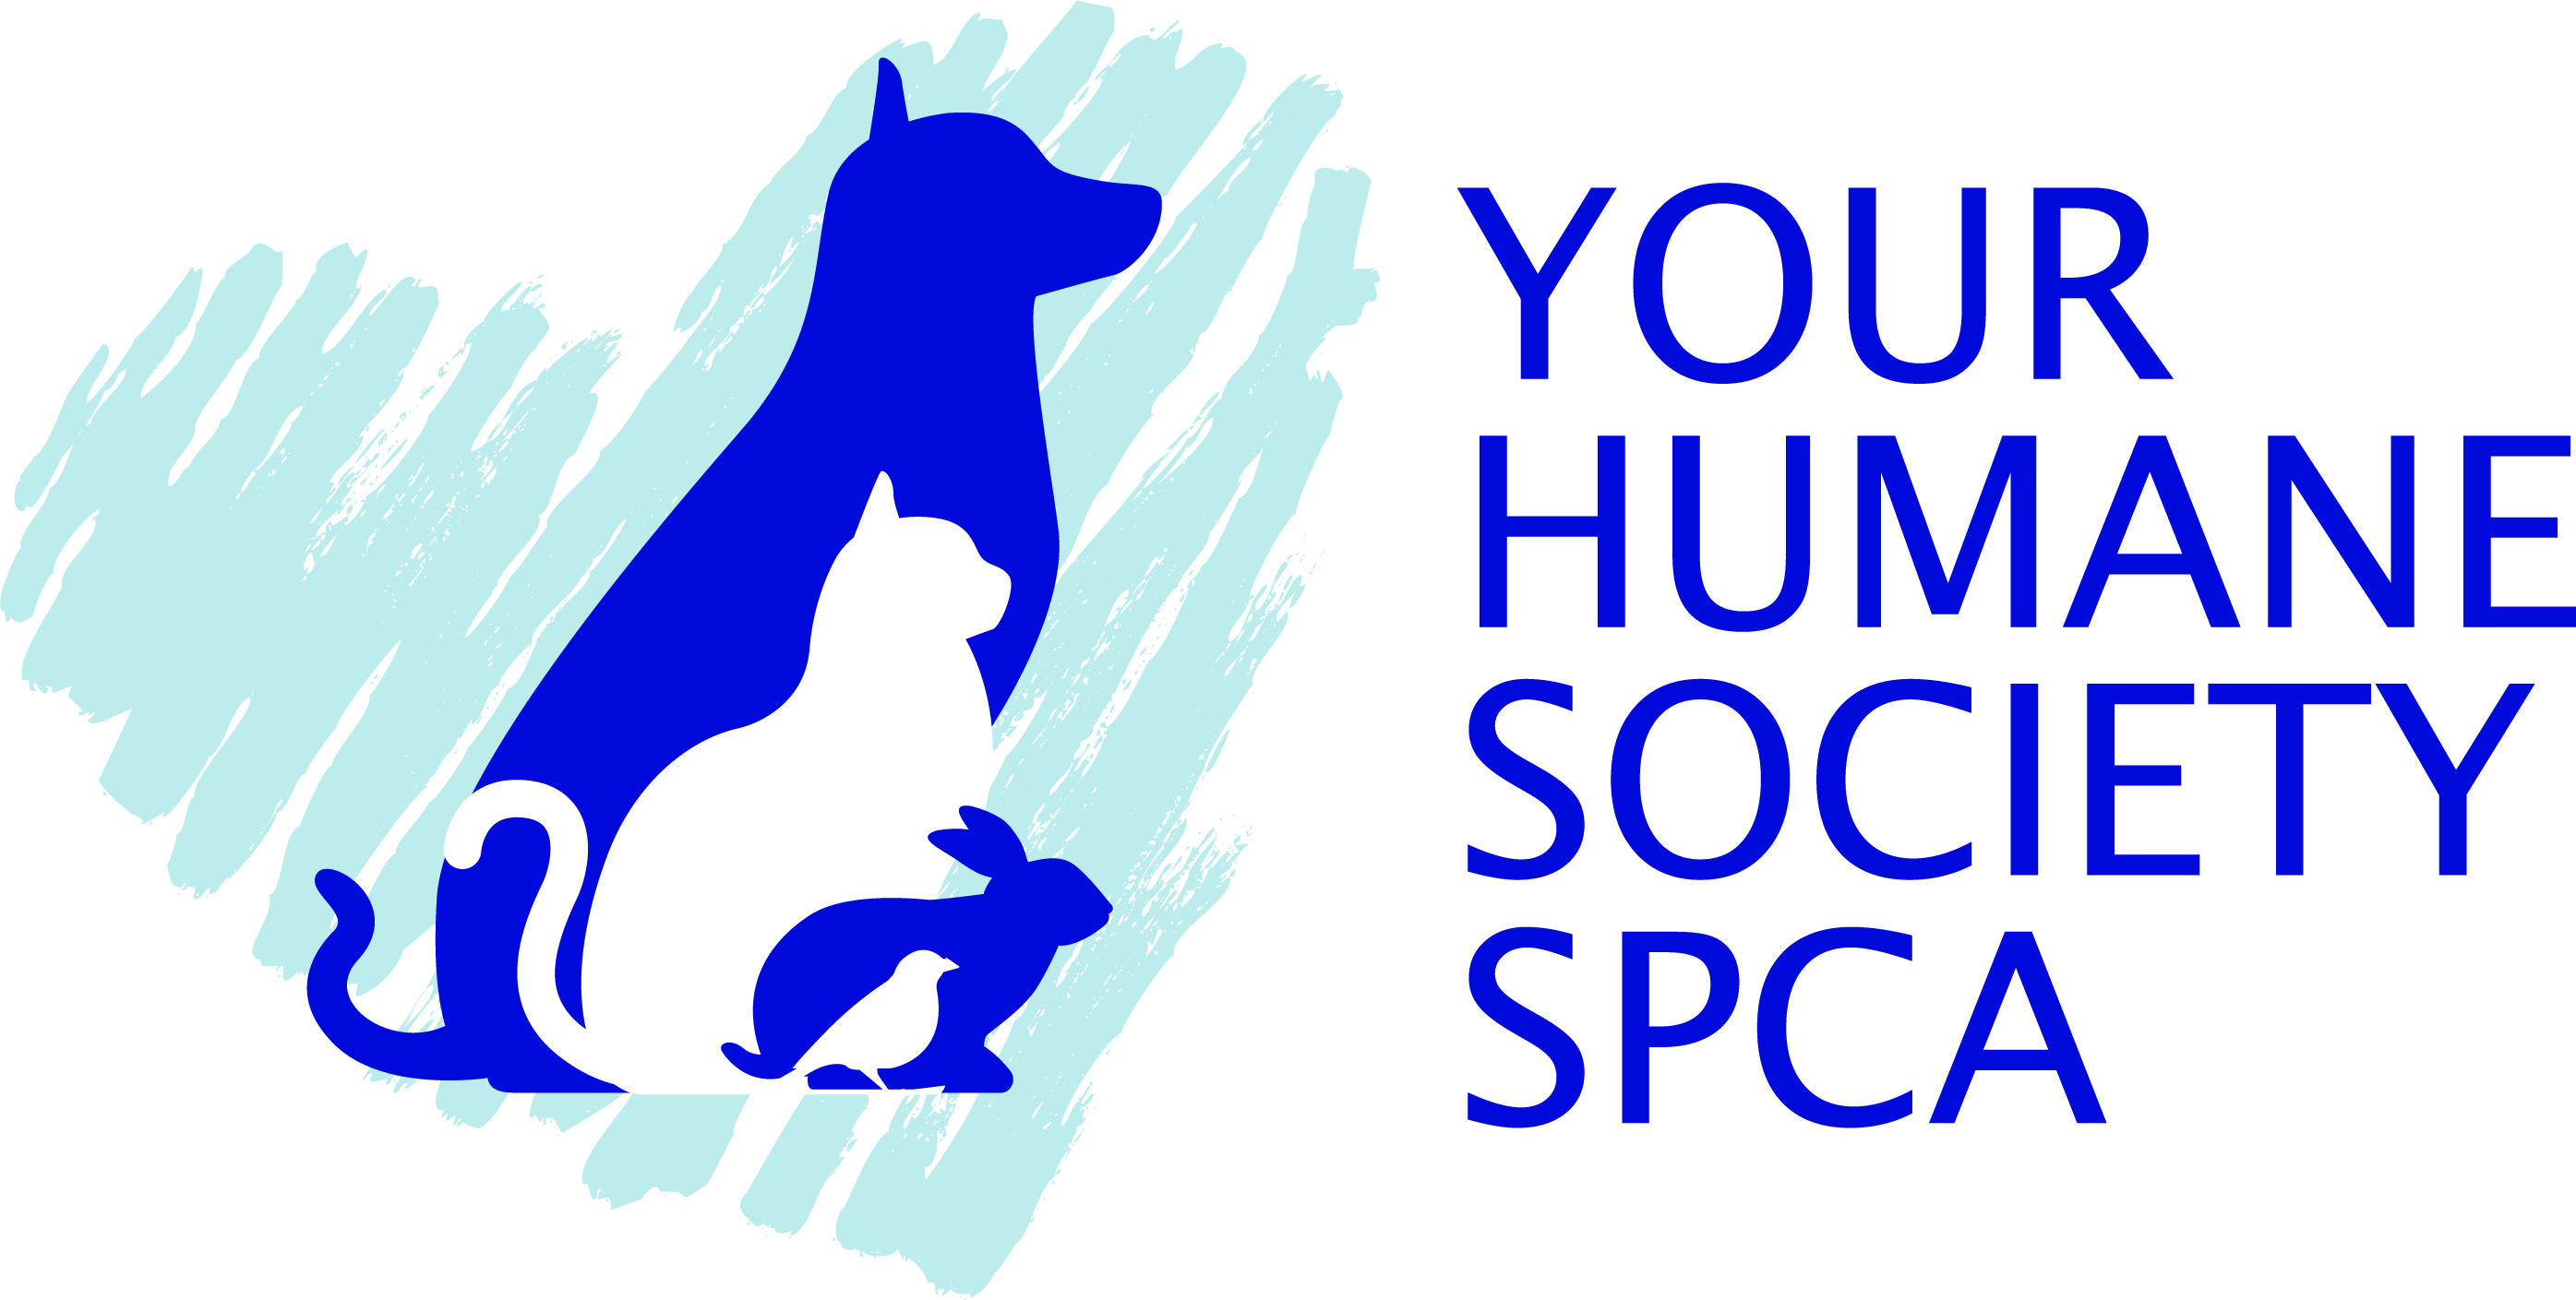 YOUR Humane Society SPCA